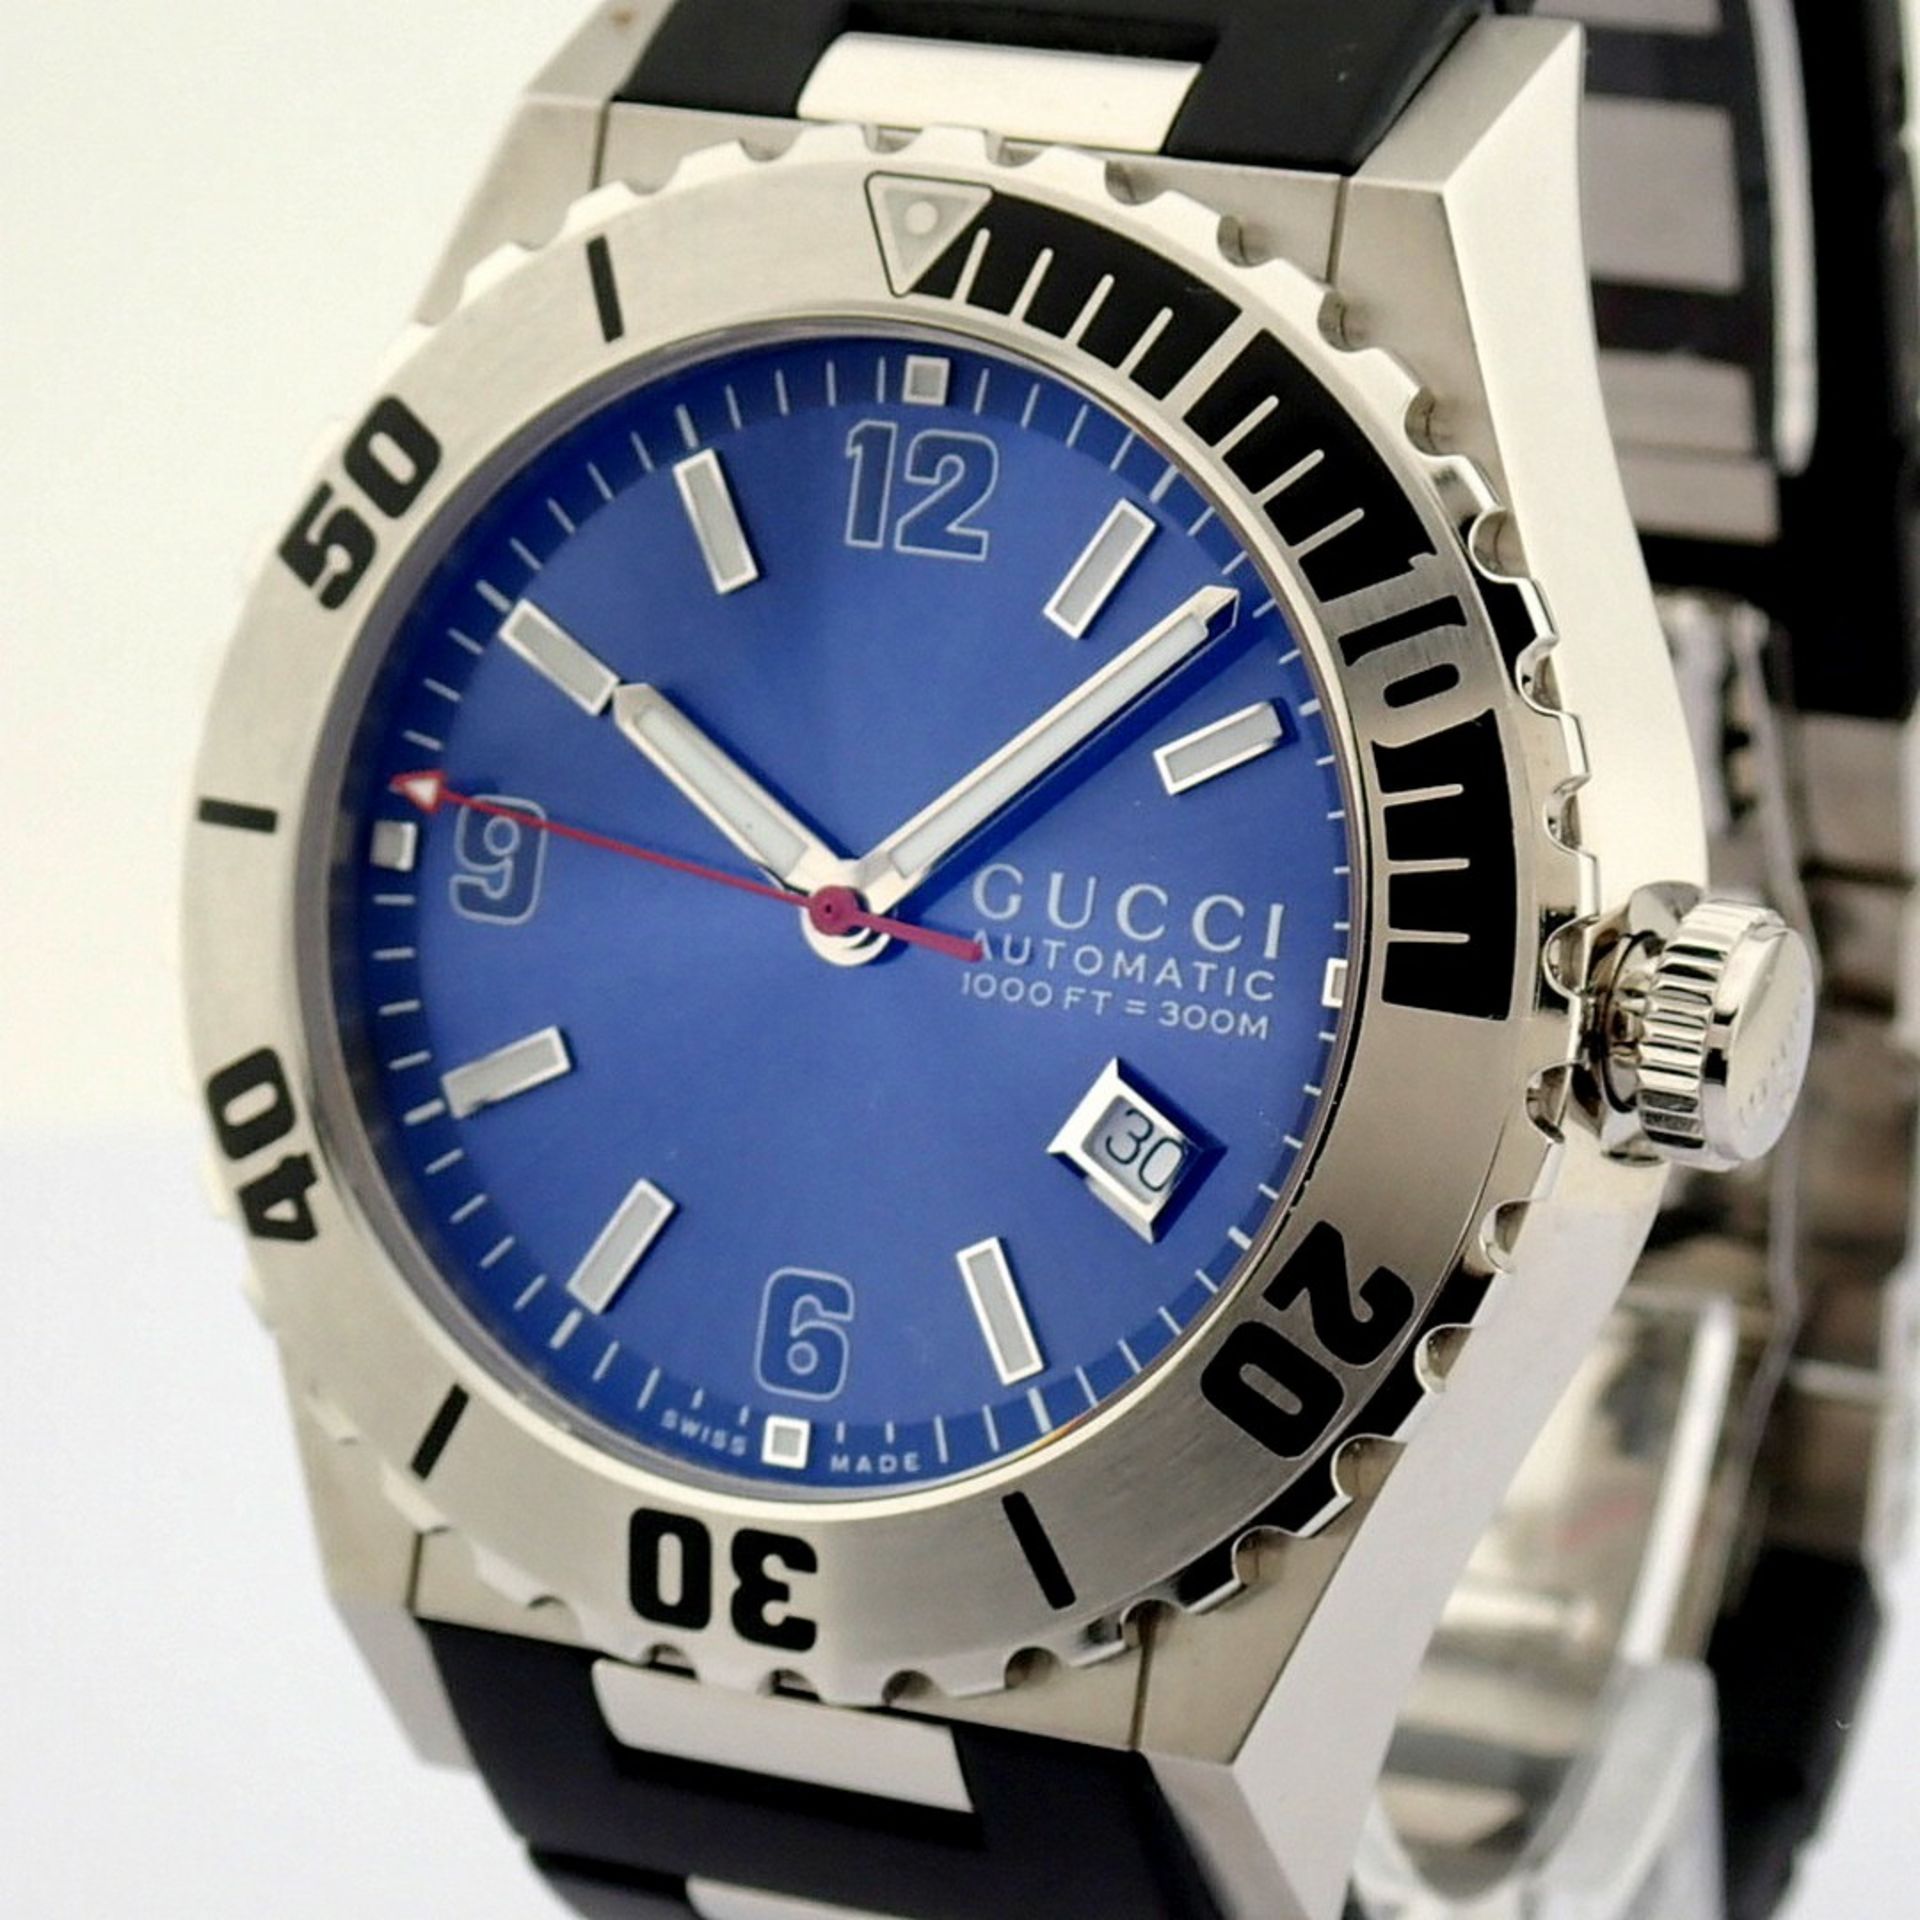 Gucci / Pantheon 115.2 (Brand New) - Gentlmen's Steel Wrist Watch - Image 9 of 13